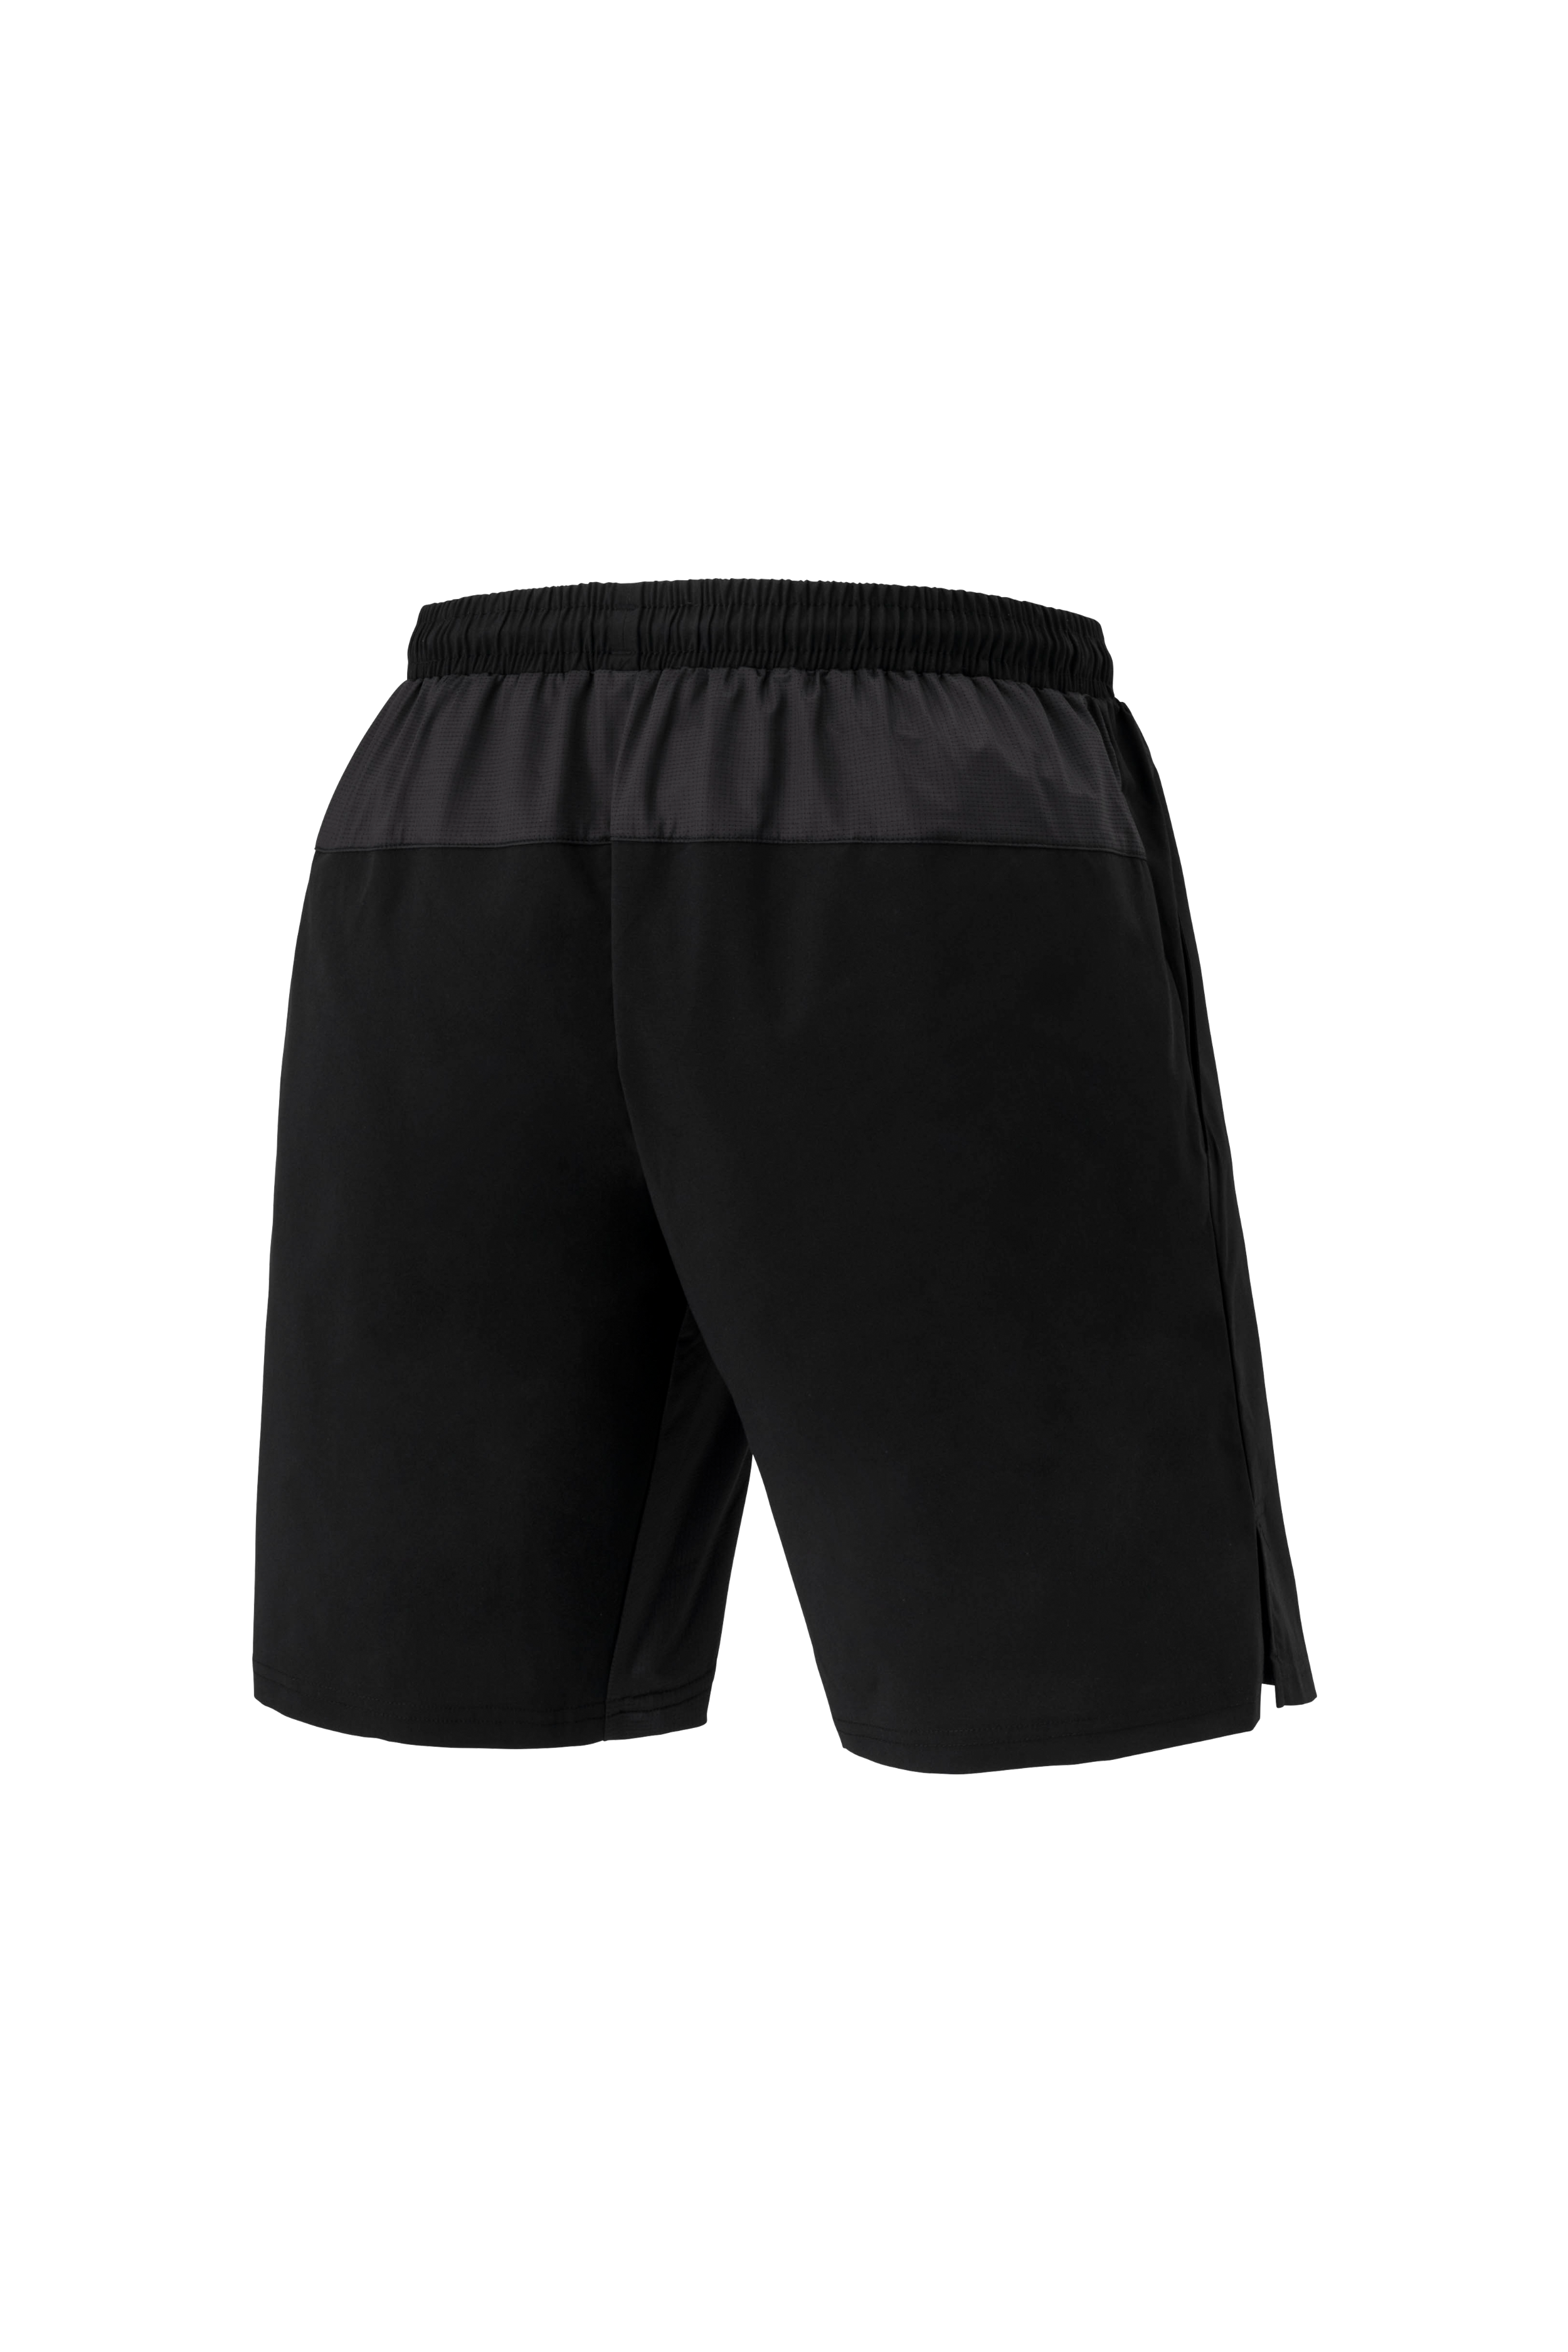 Yonex Shorts (Men's)